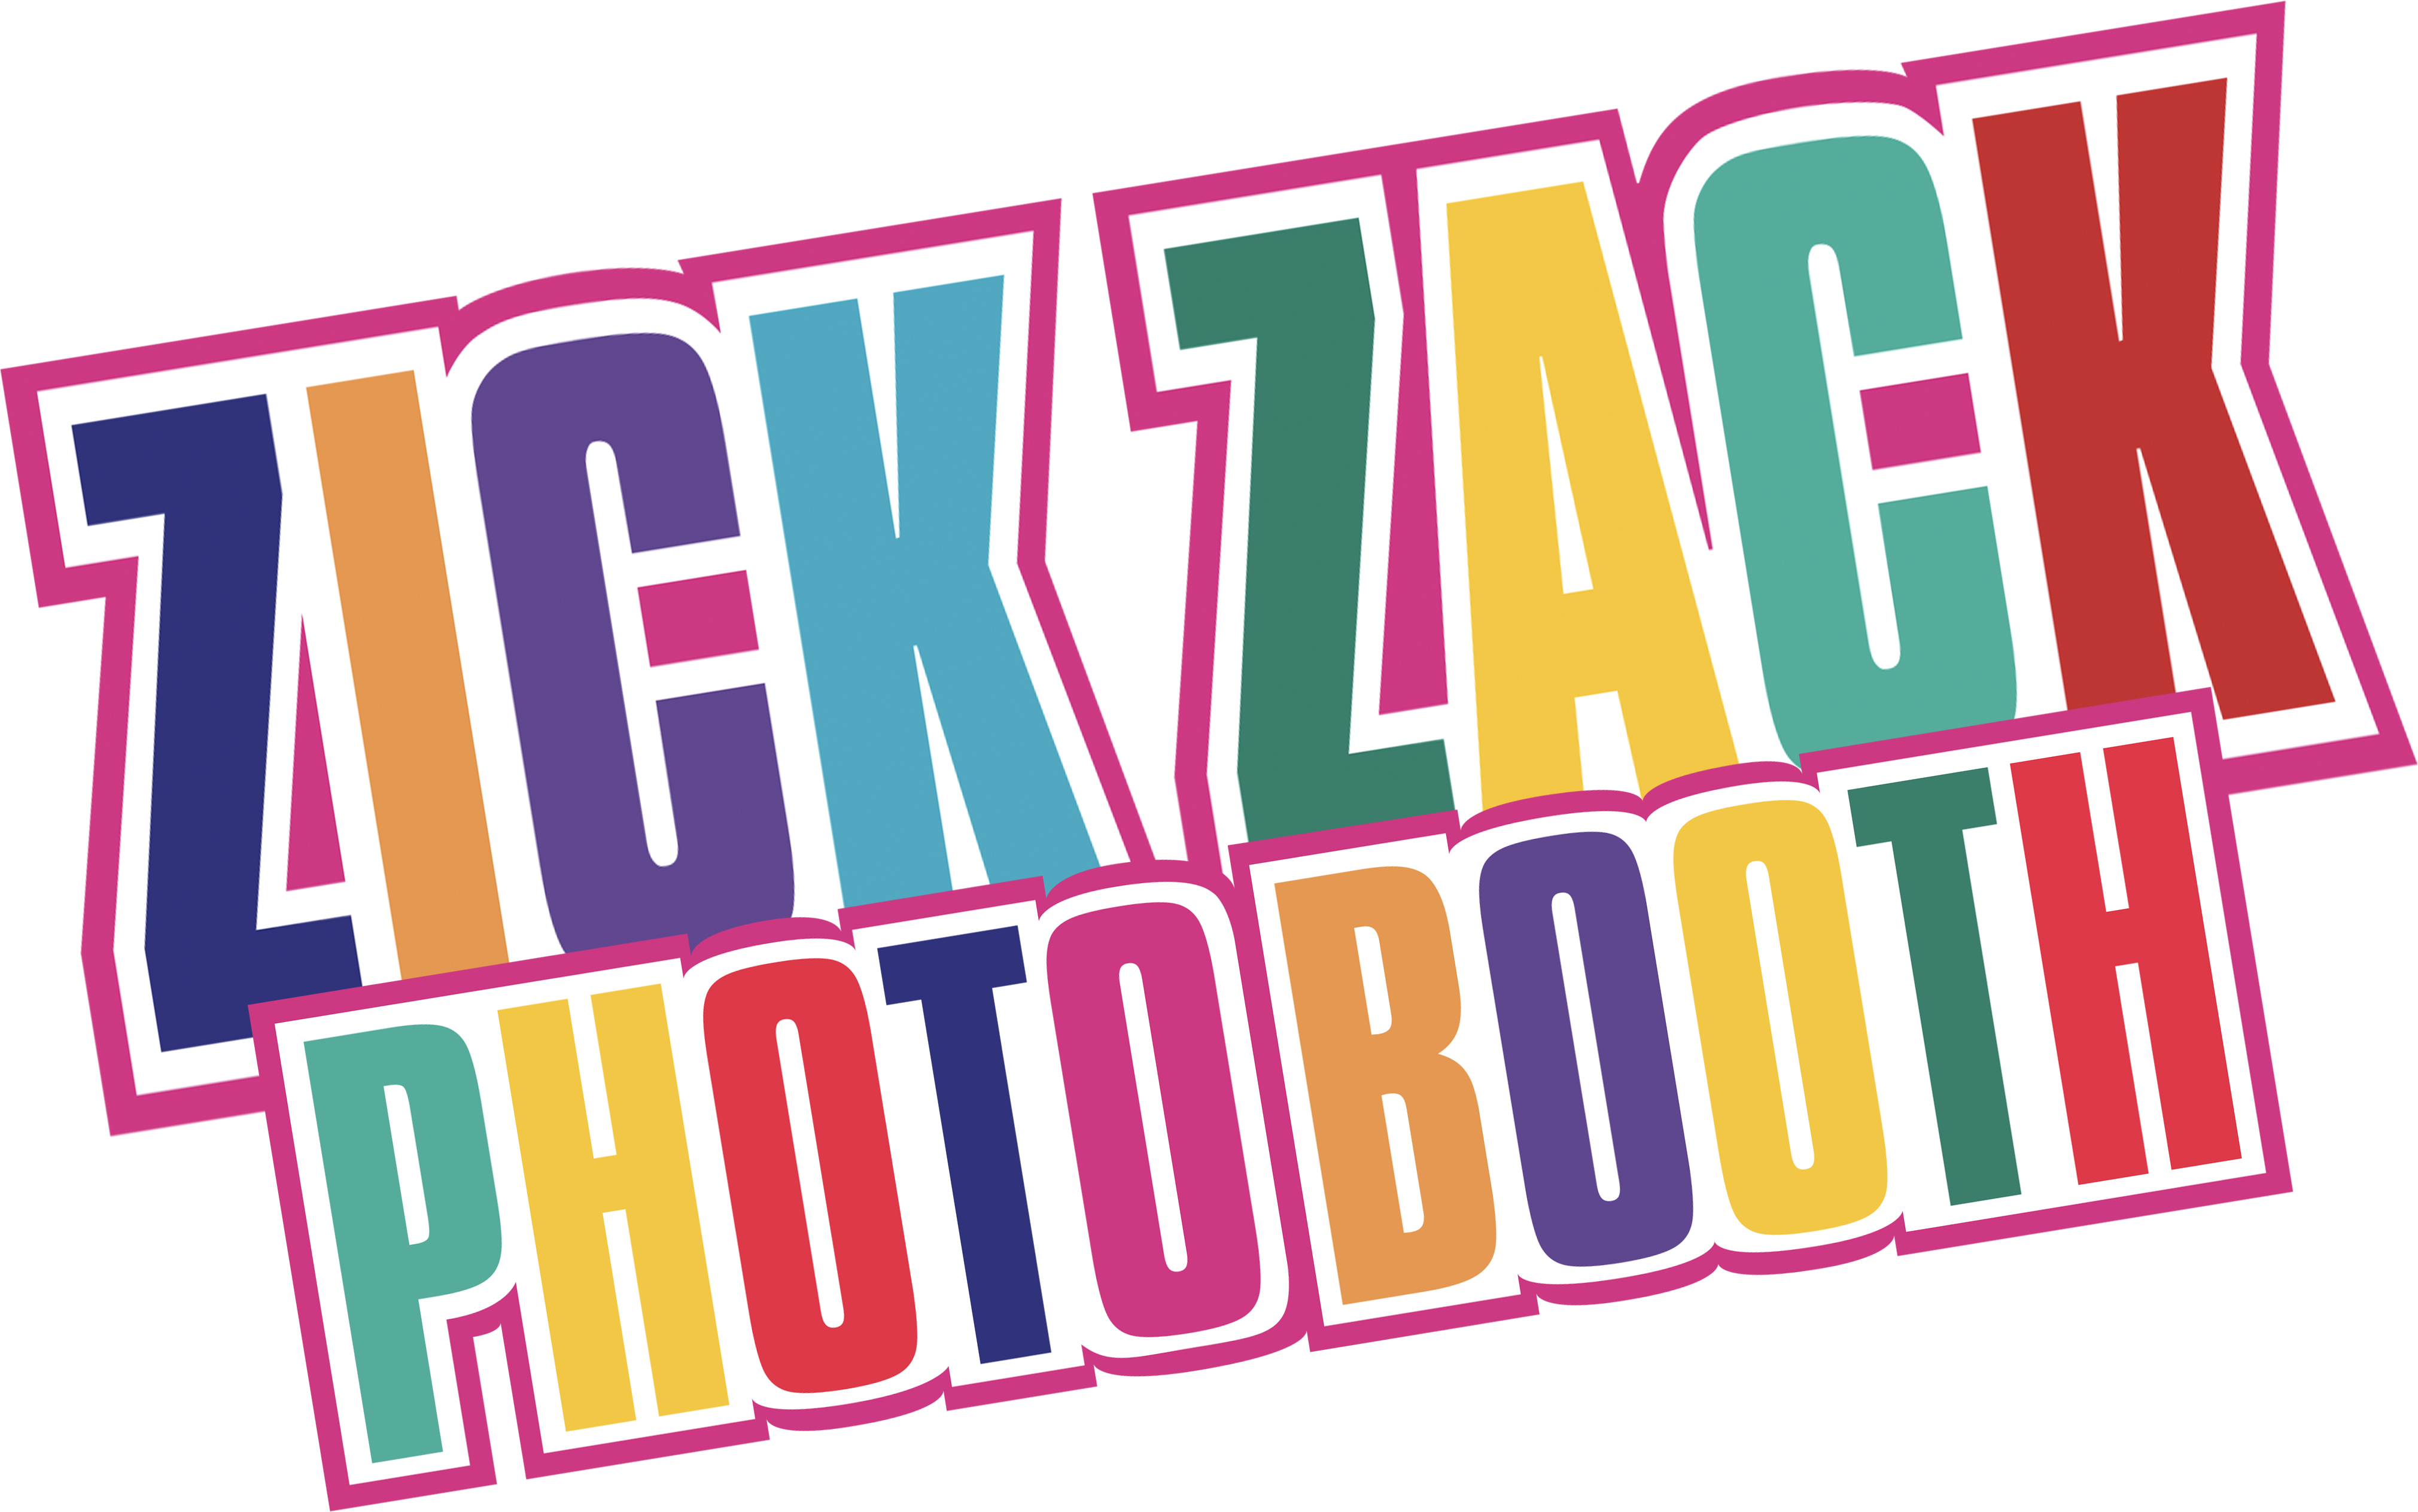 ZICK ZACK PHOTOBOOTH